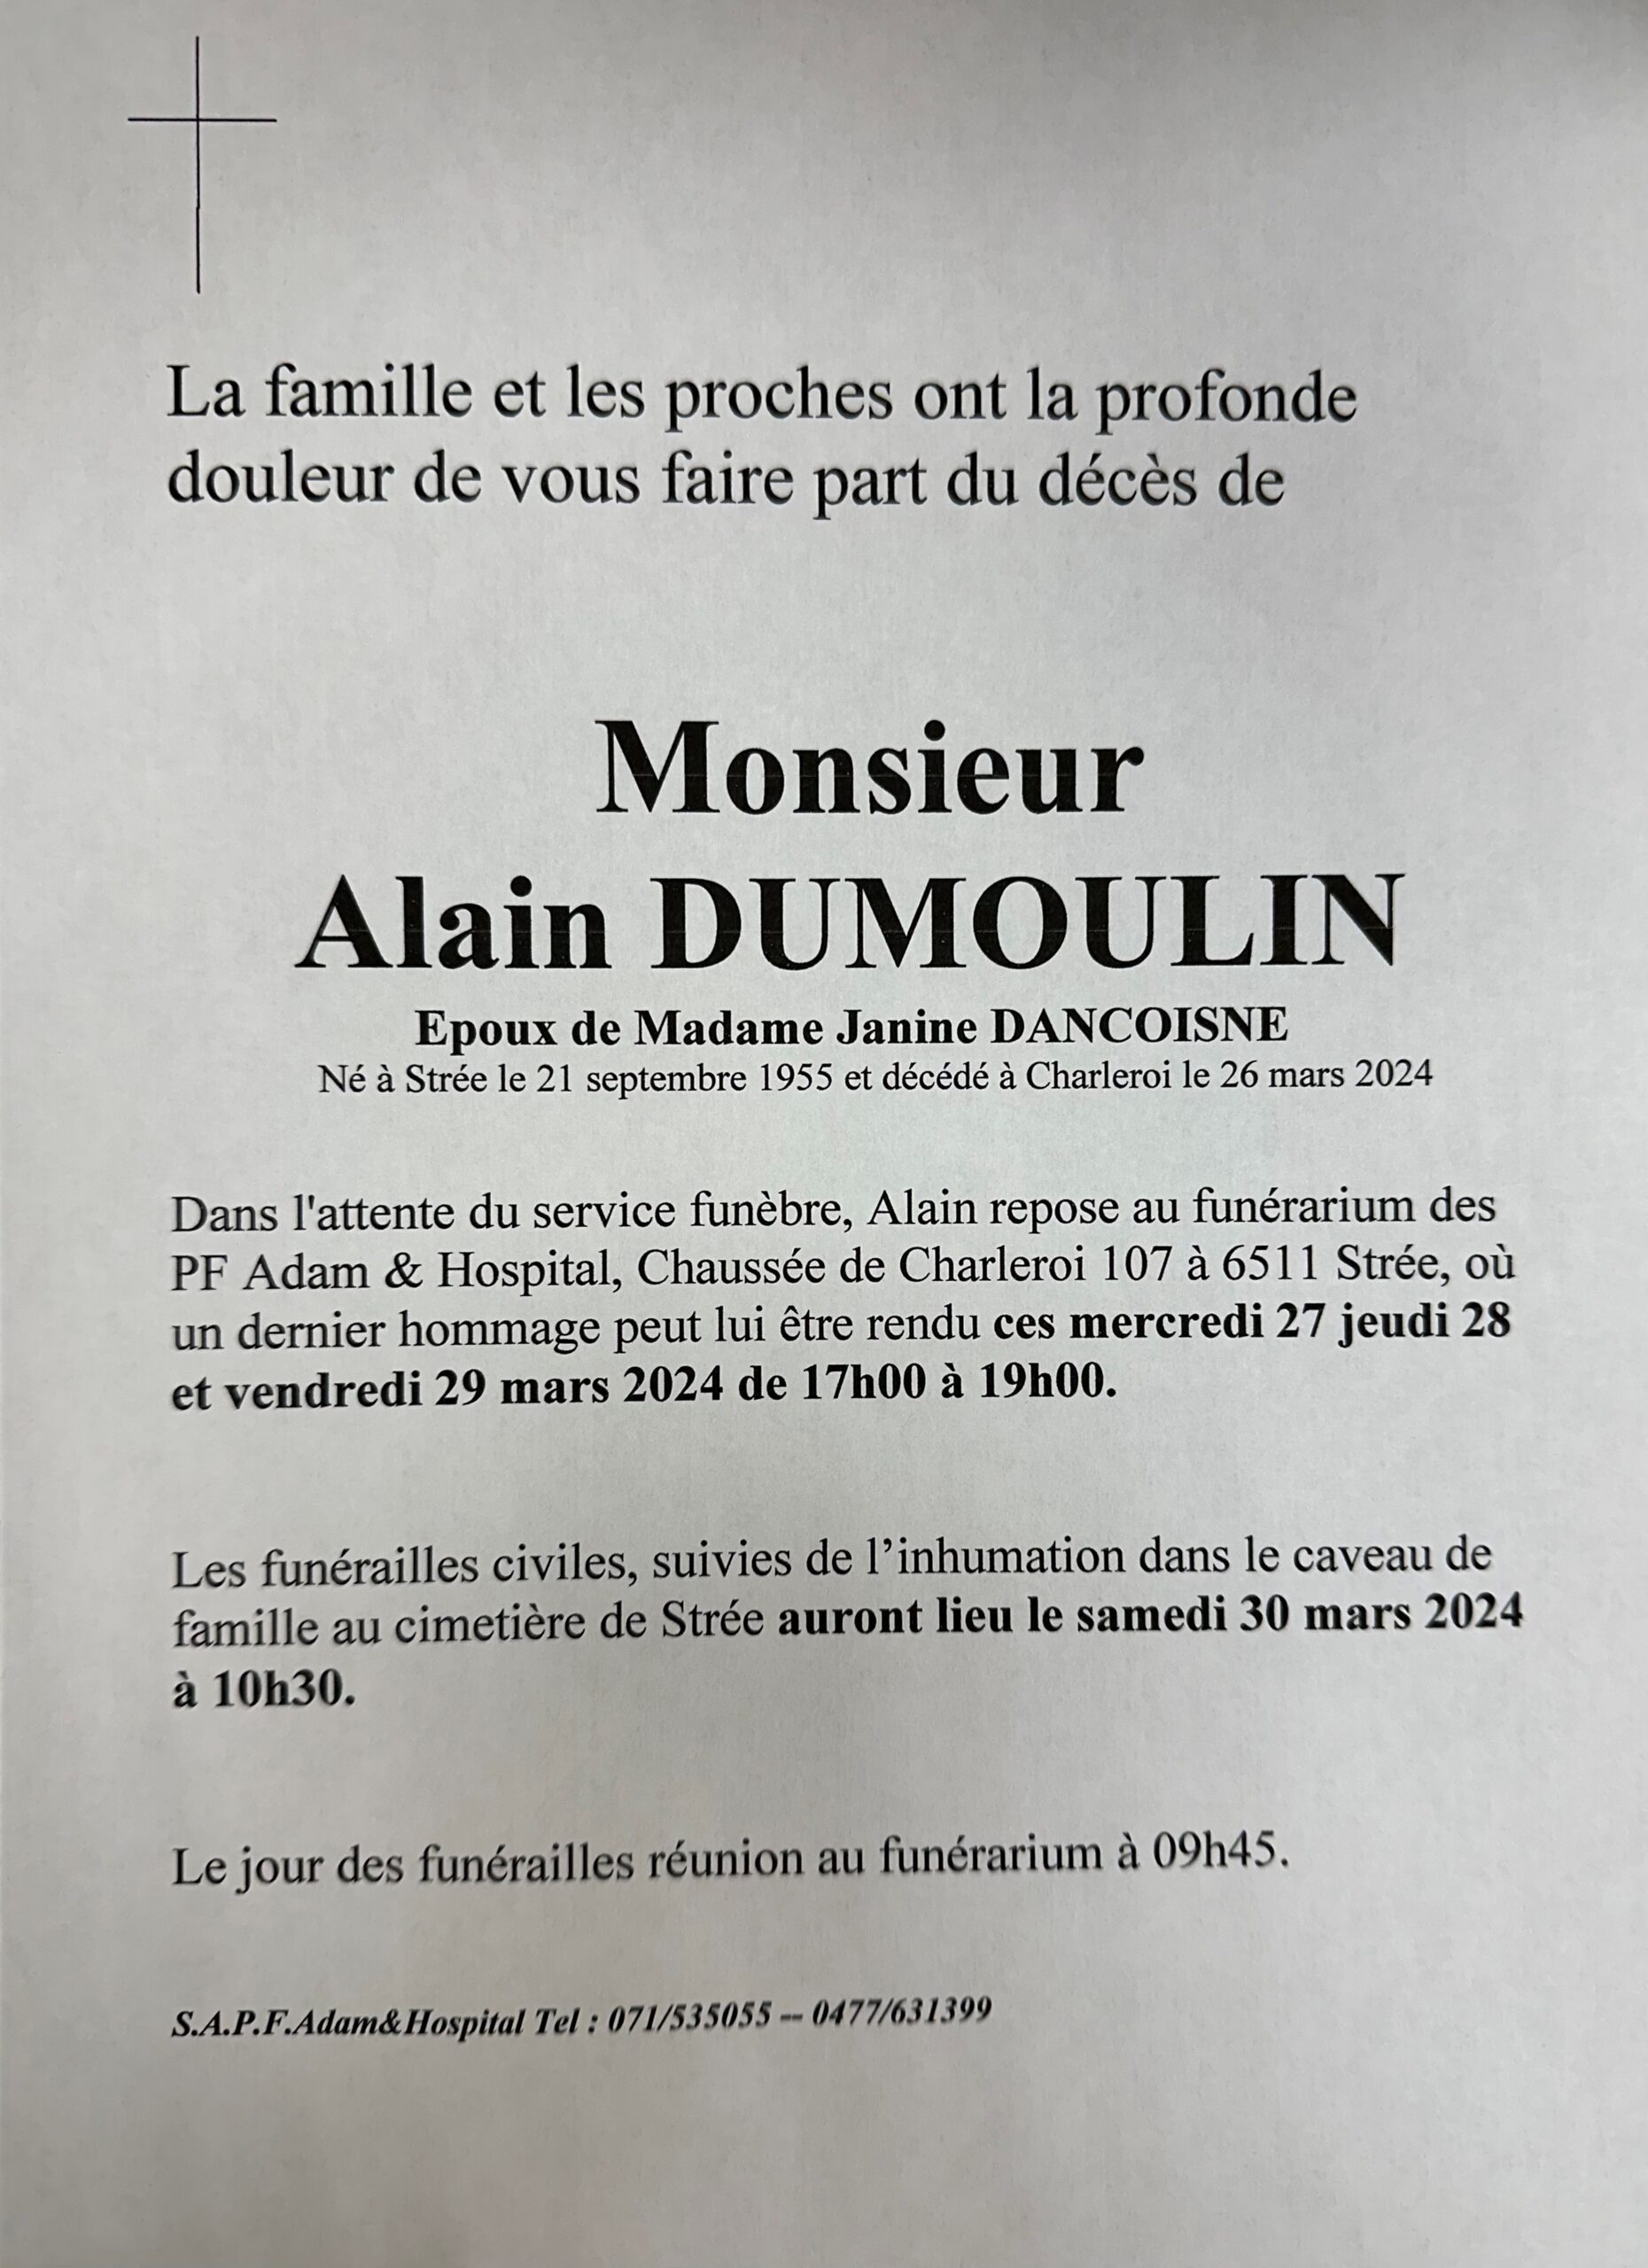 ALAIN DUMOULIN scaled | Funérailles Adam Hospital